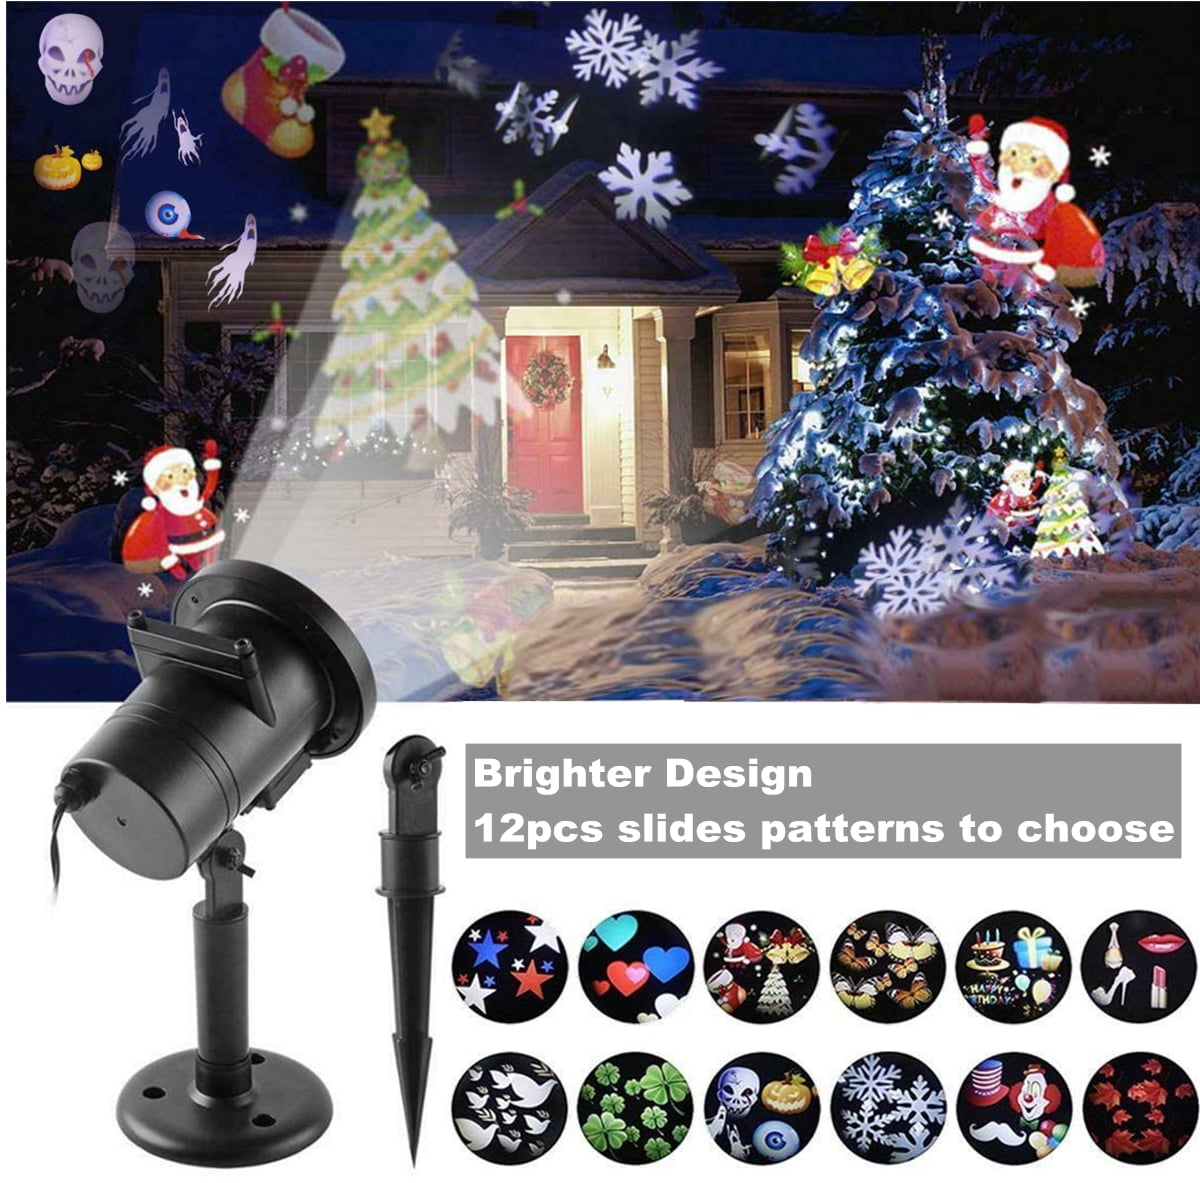 12Patterns Christmas LED Laser Projector Light Landscape Outdoor Xmas Santa Lamp 